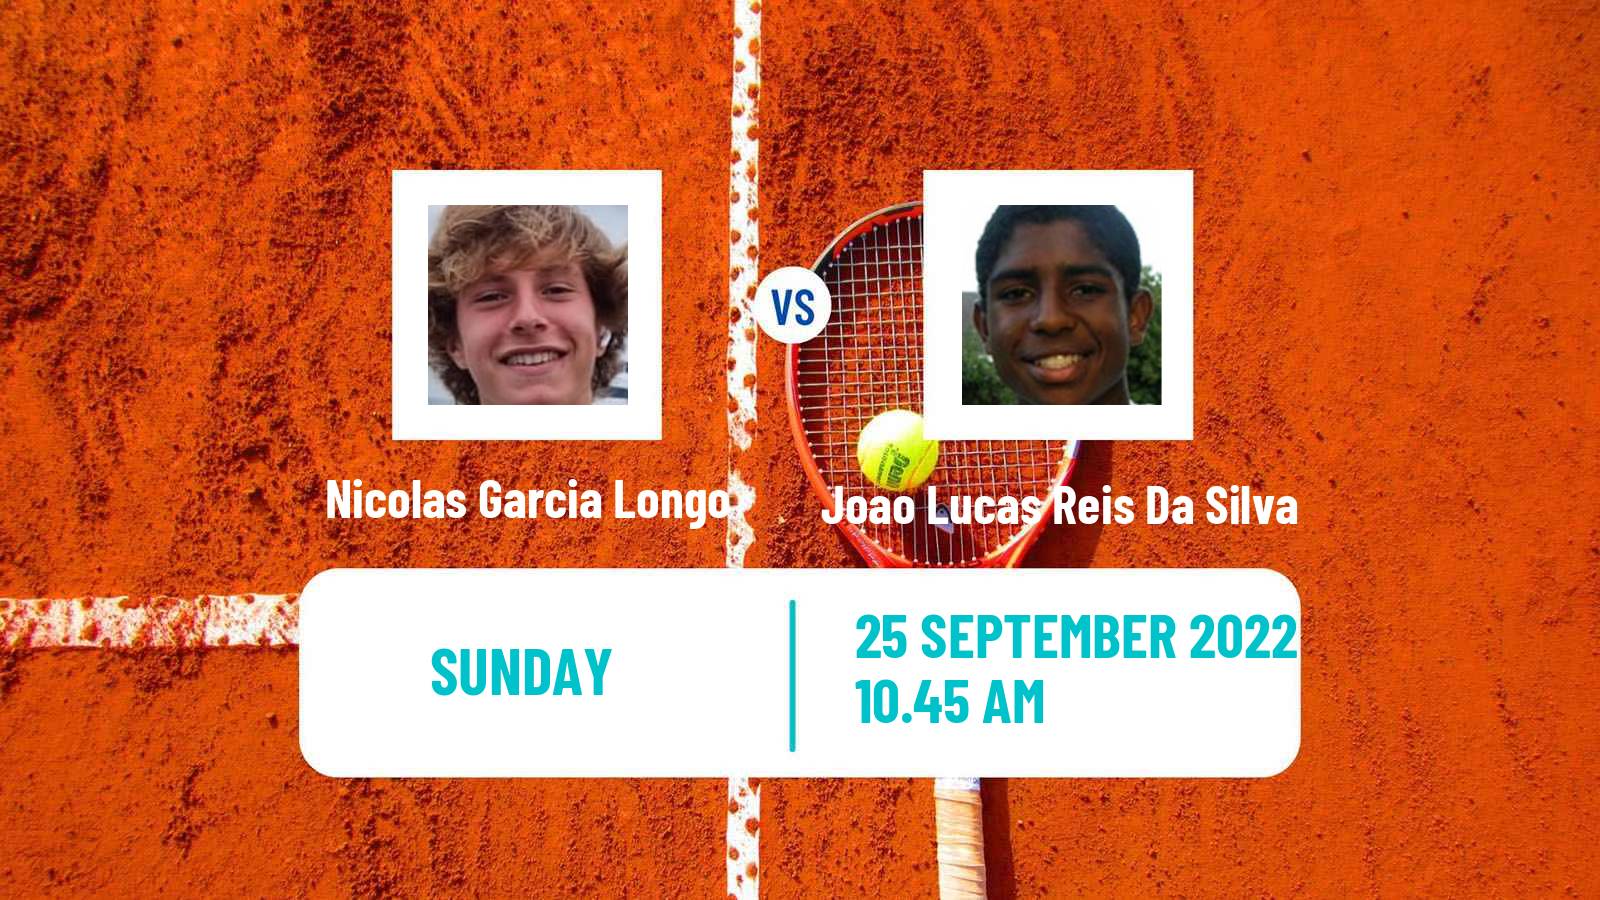 Tennis ATP Challenger Nicolas Garcia Longo - Joao Lucas Reis Da Silva